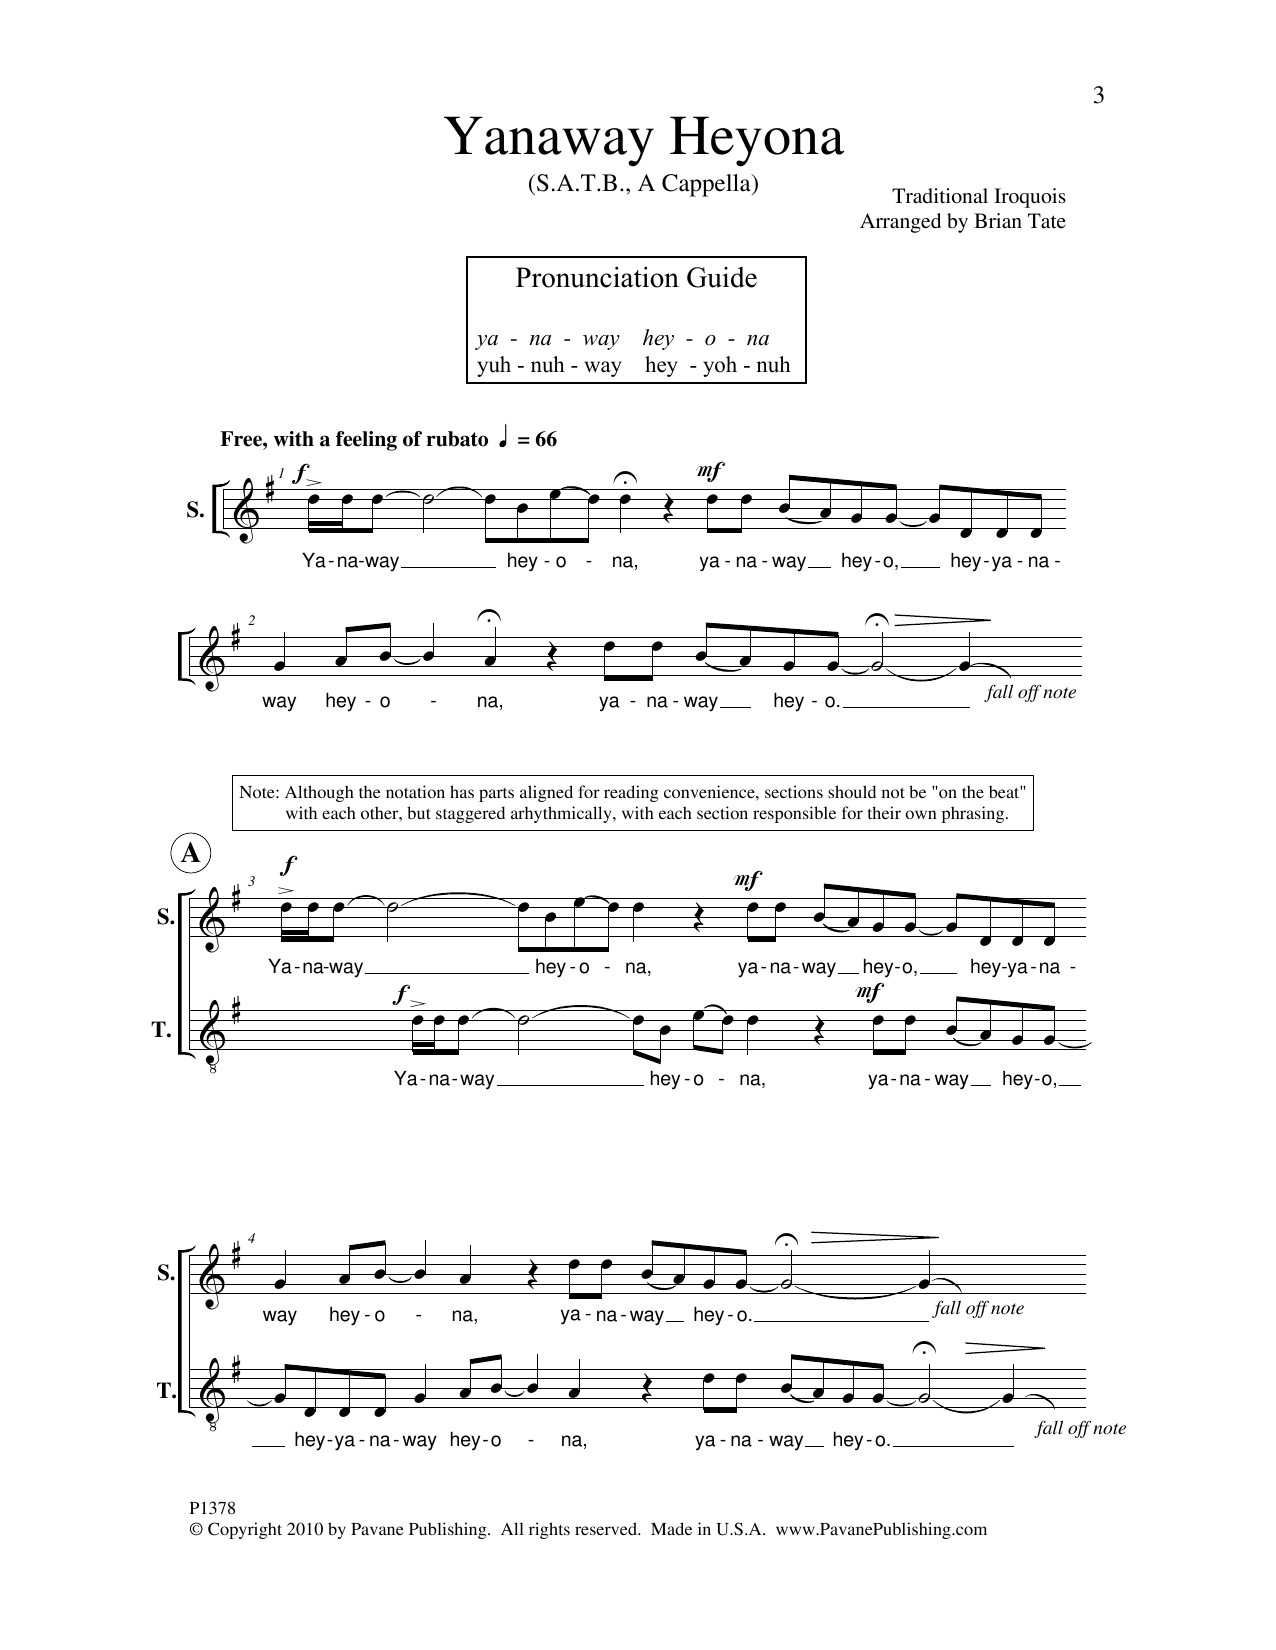 Brian Tate Yanaway Heyona Sheet Music Notes & Chords for SATB Choir - Download or Print PDF